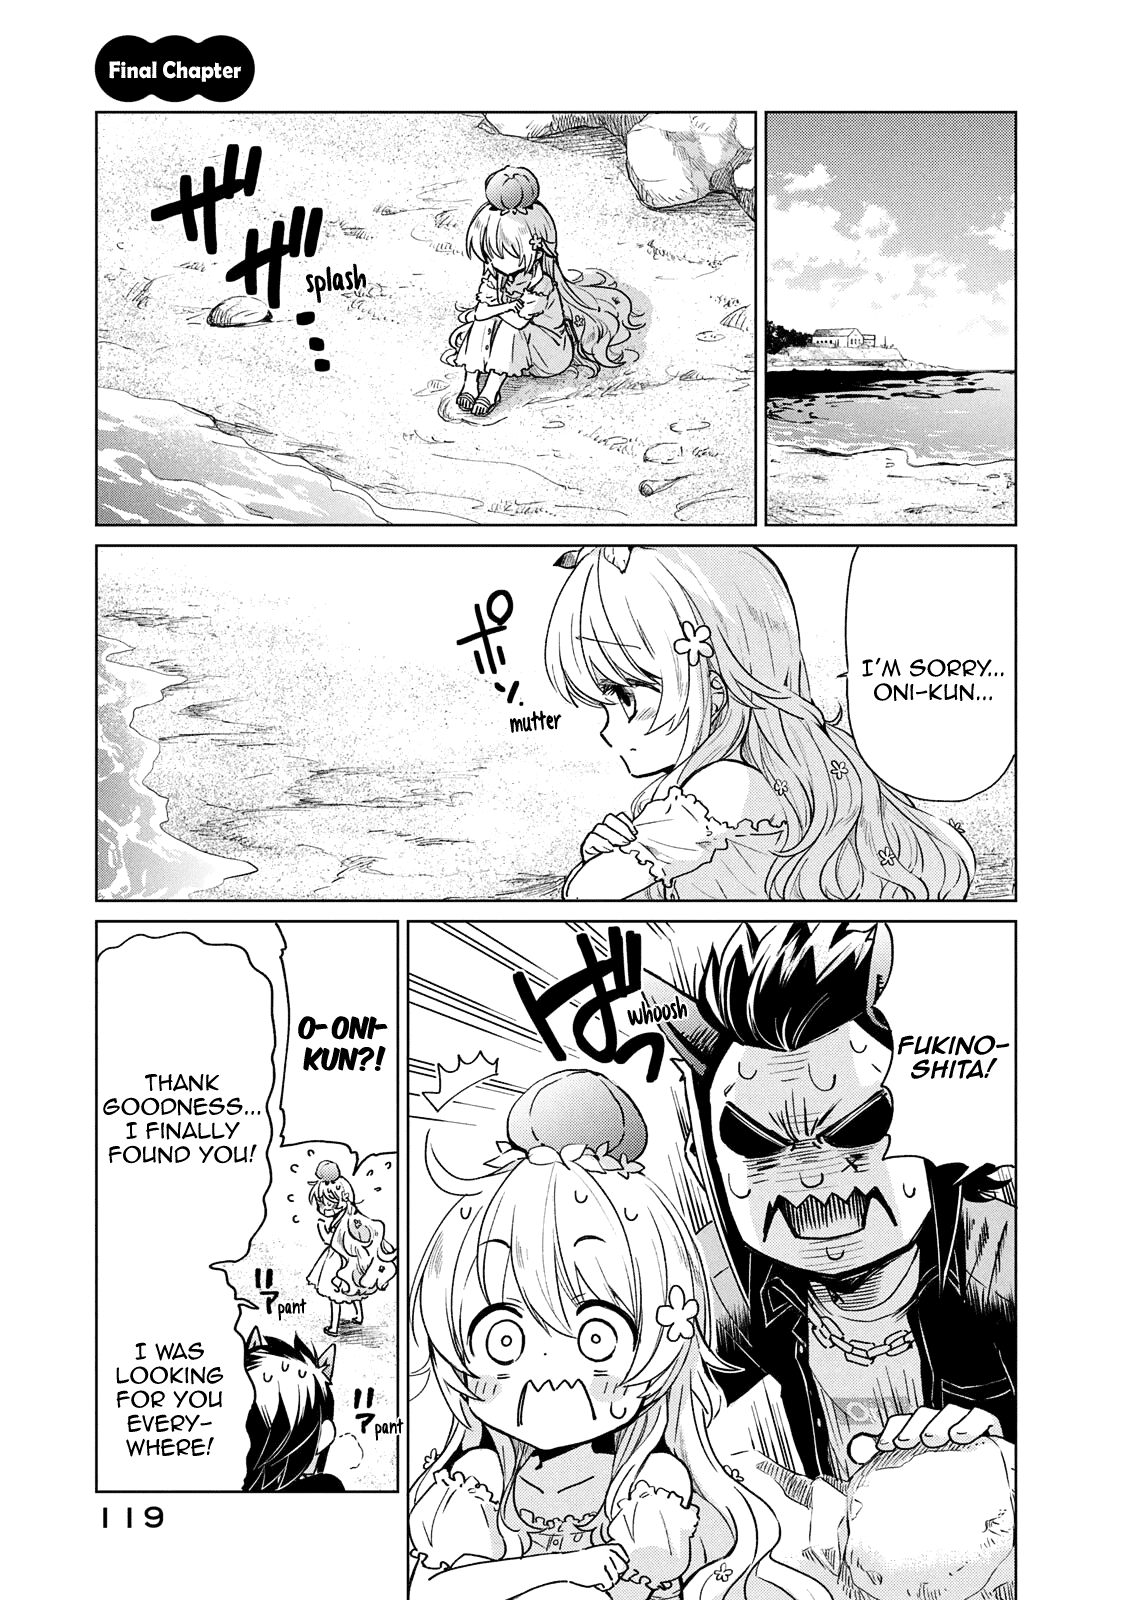 Fukinoshita-San Is Small - Page 2